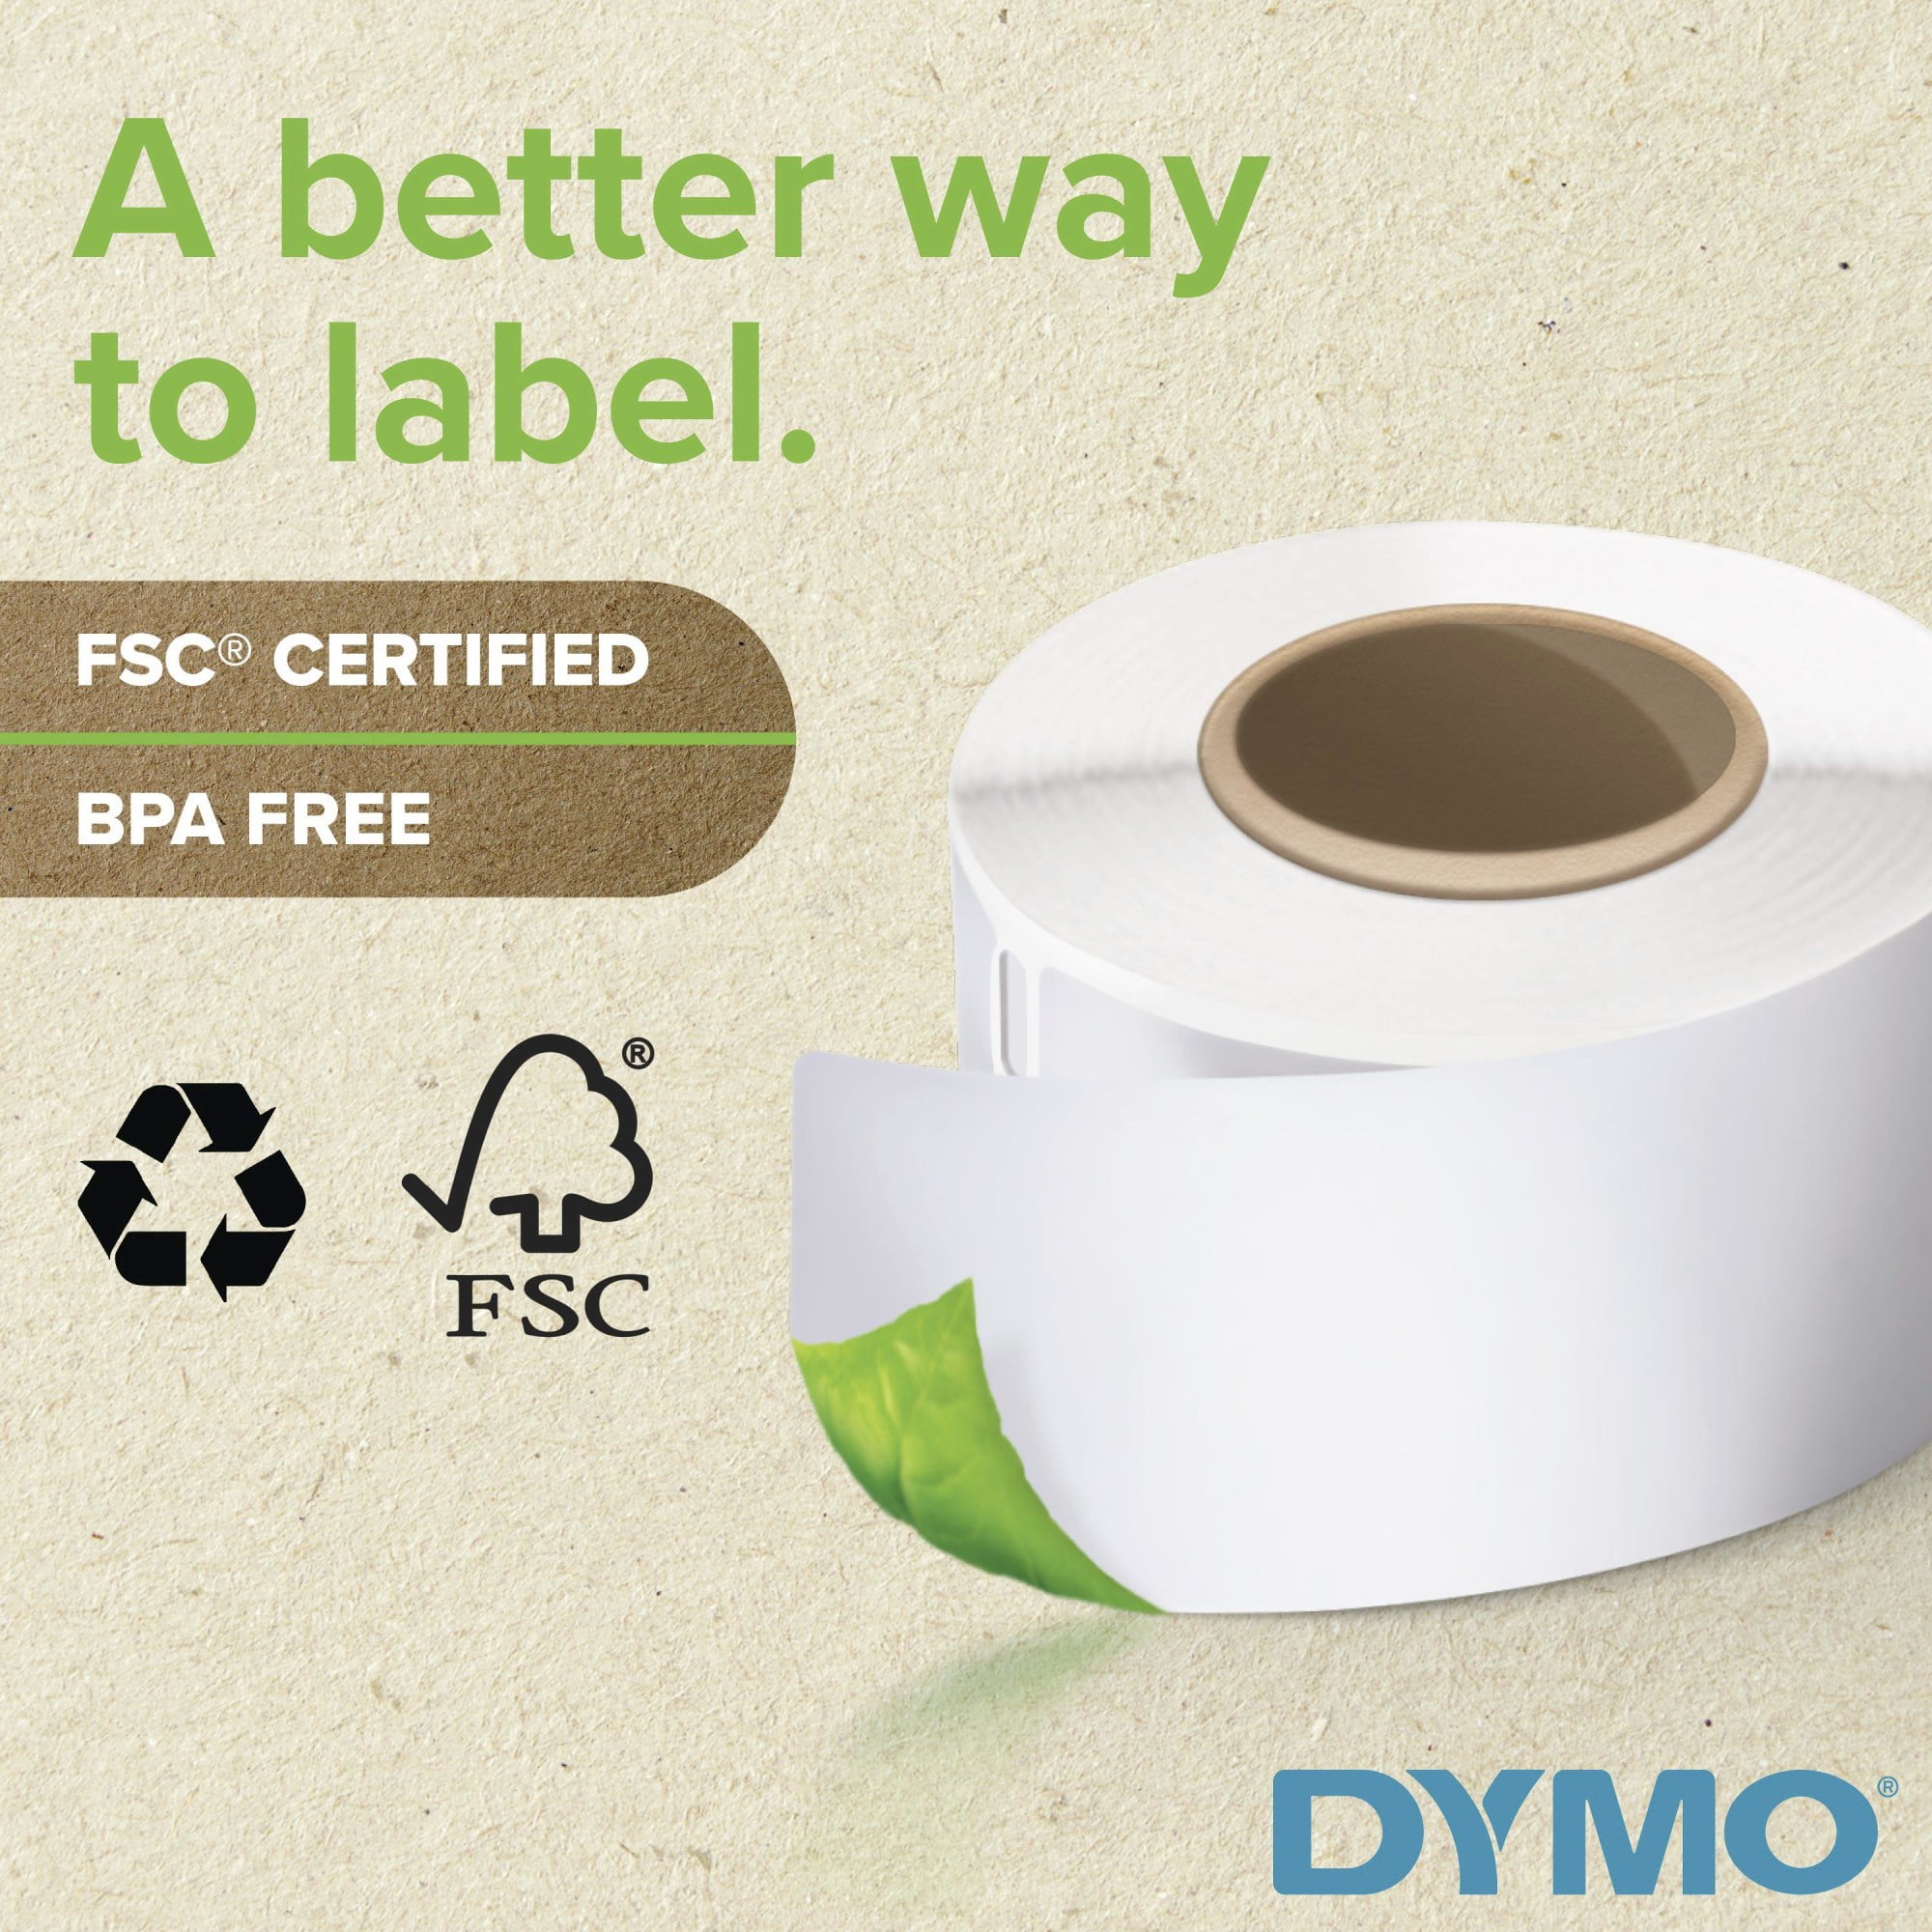 Dymo LV-004-3031 2-up Polypropylene Labels - 1-1/2 x 1/2 Laboratory Labels